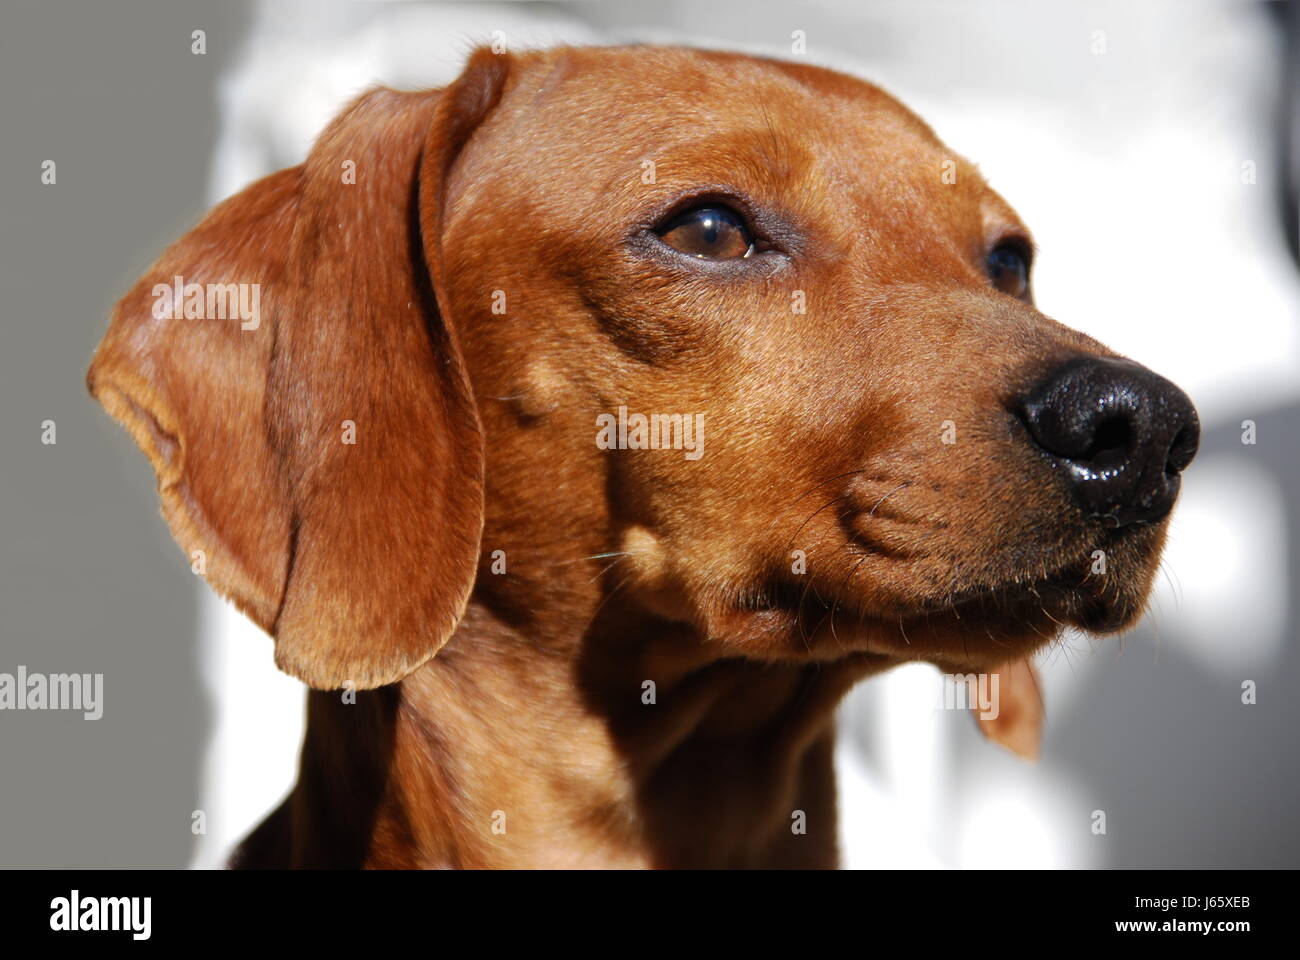 Hund Dackel Makro Nahaufnahme Makro Aufnahme hautnah Ansicht Tier Haustier braun Stockfoto